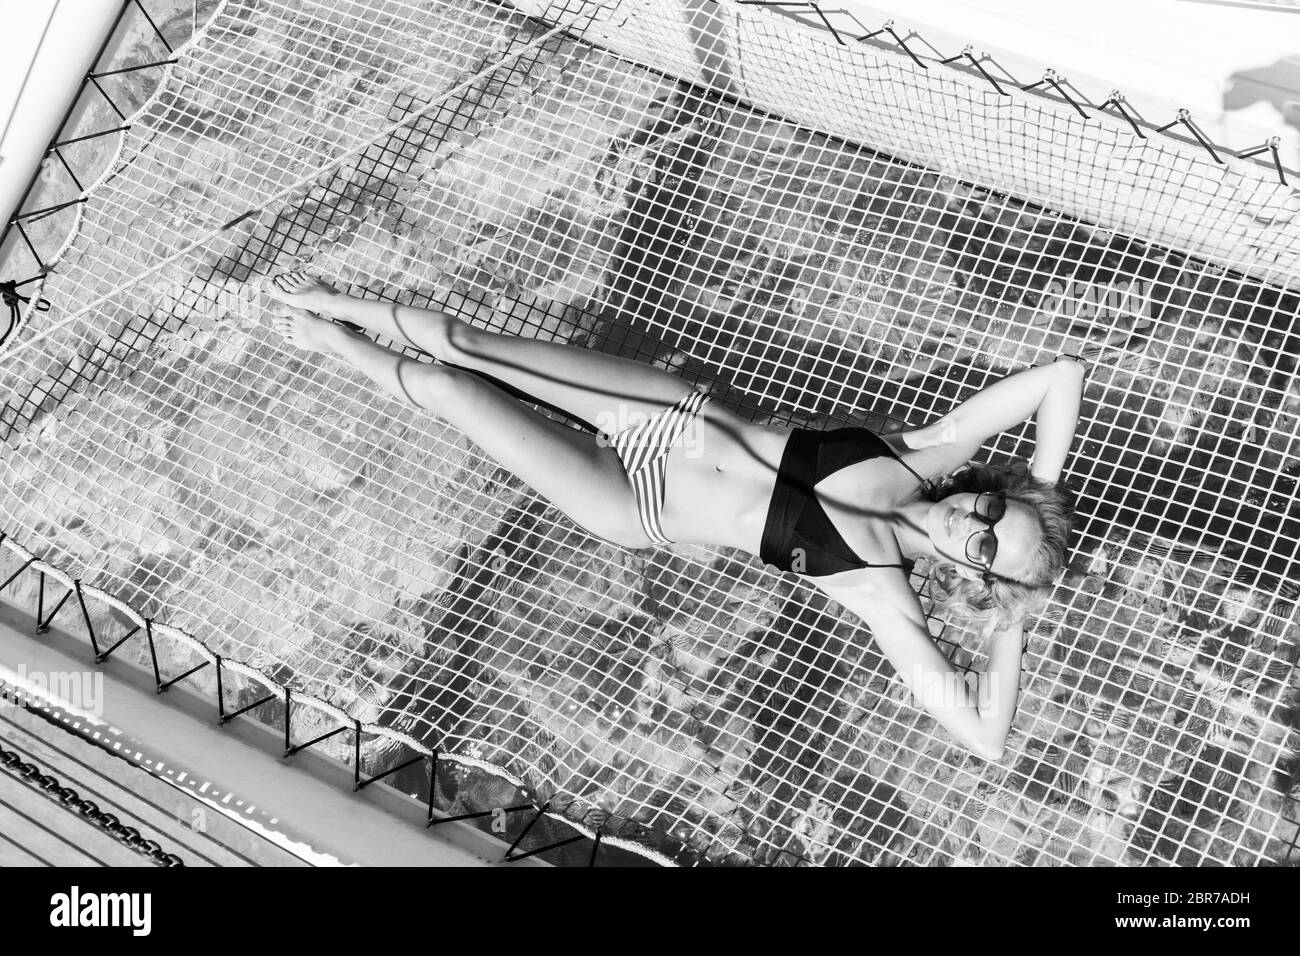 Womanin bikini tanning and relaxing on a summer sailin cruise, lying in hammock of luxury catamaran boat. Black and white image. Stock Photo